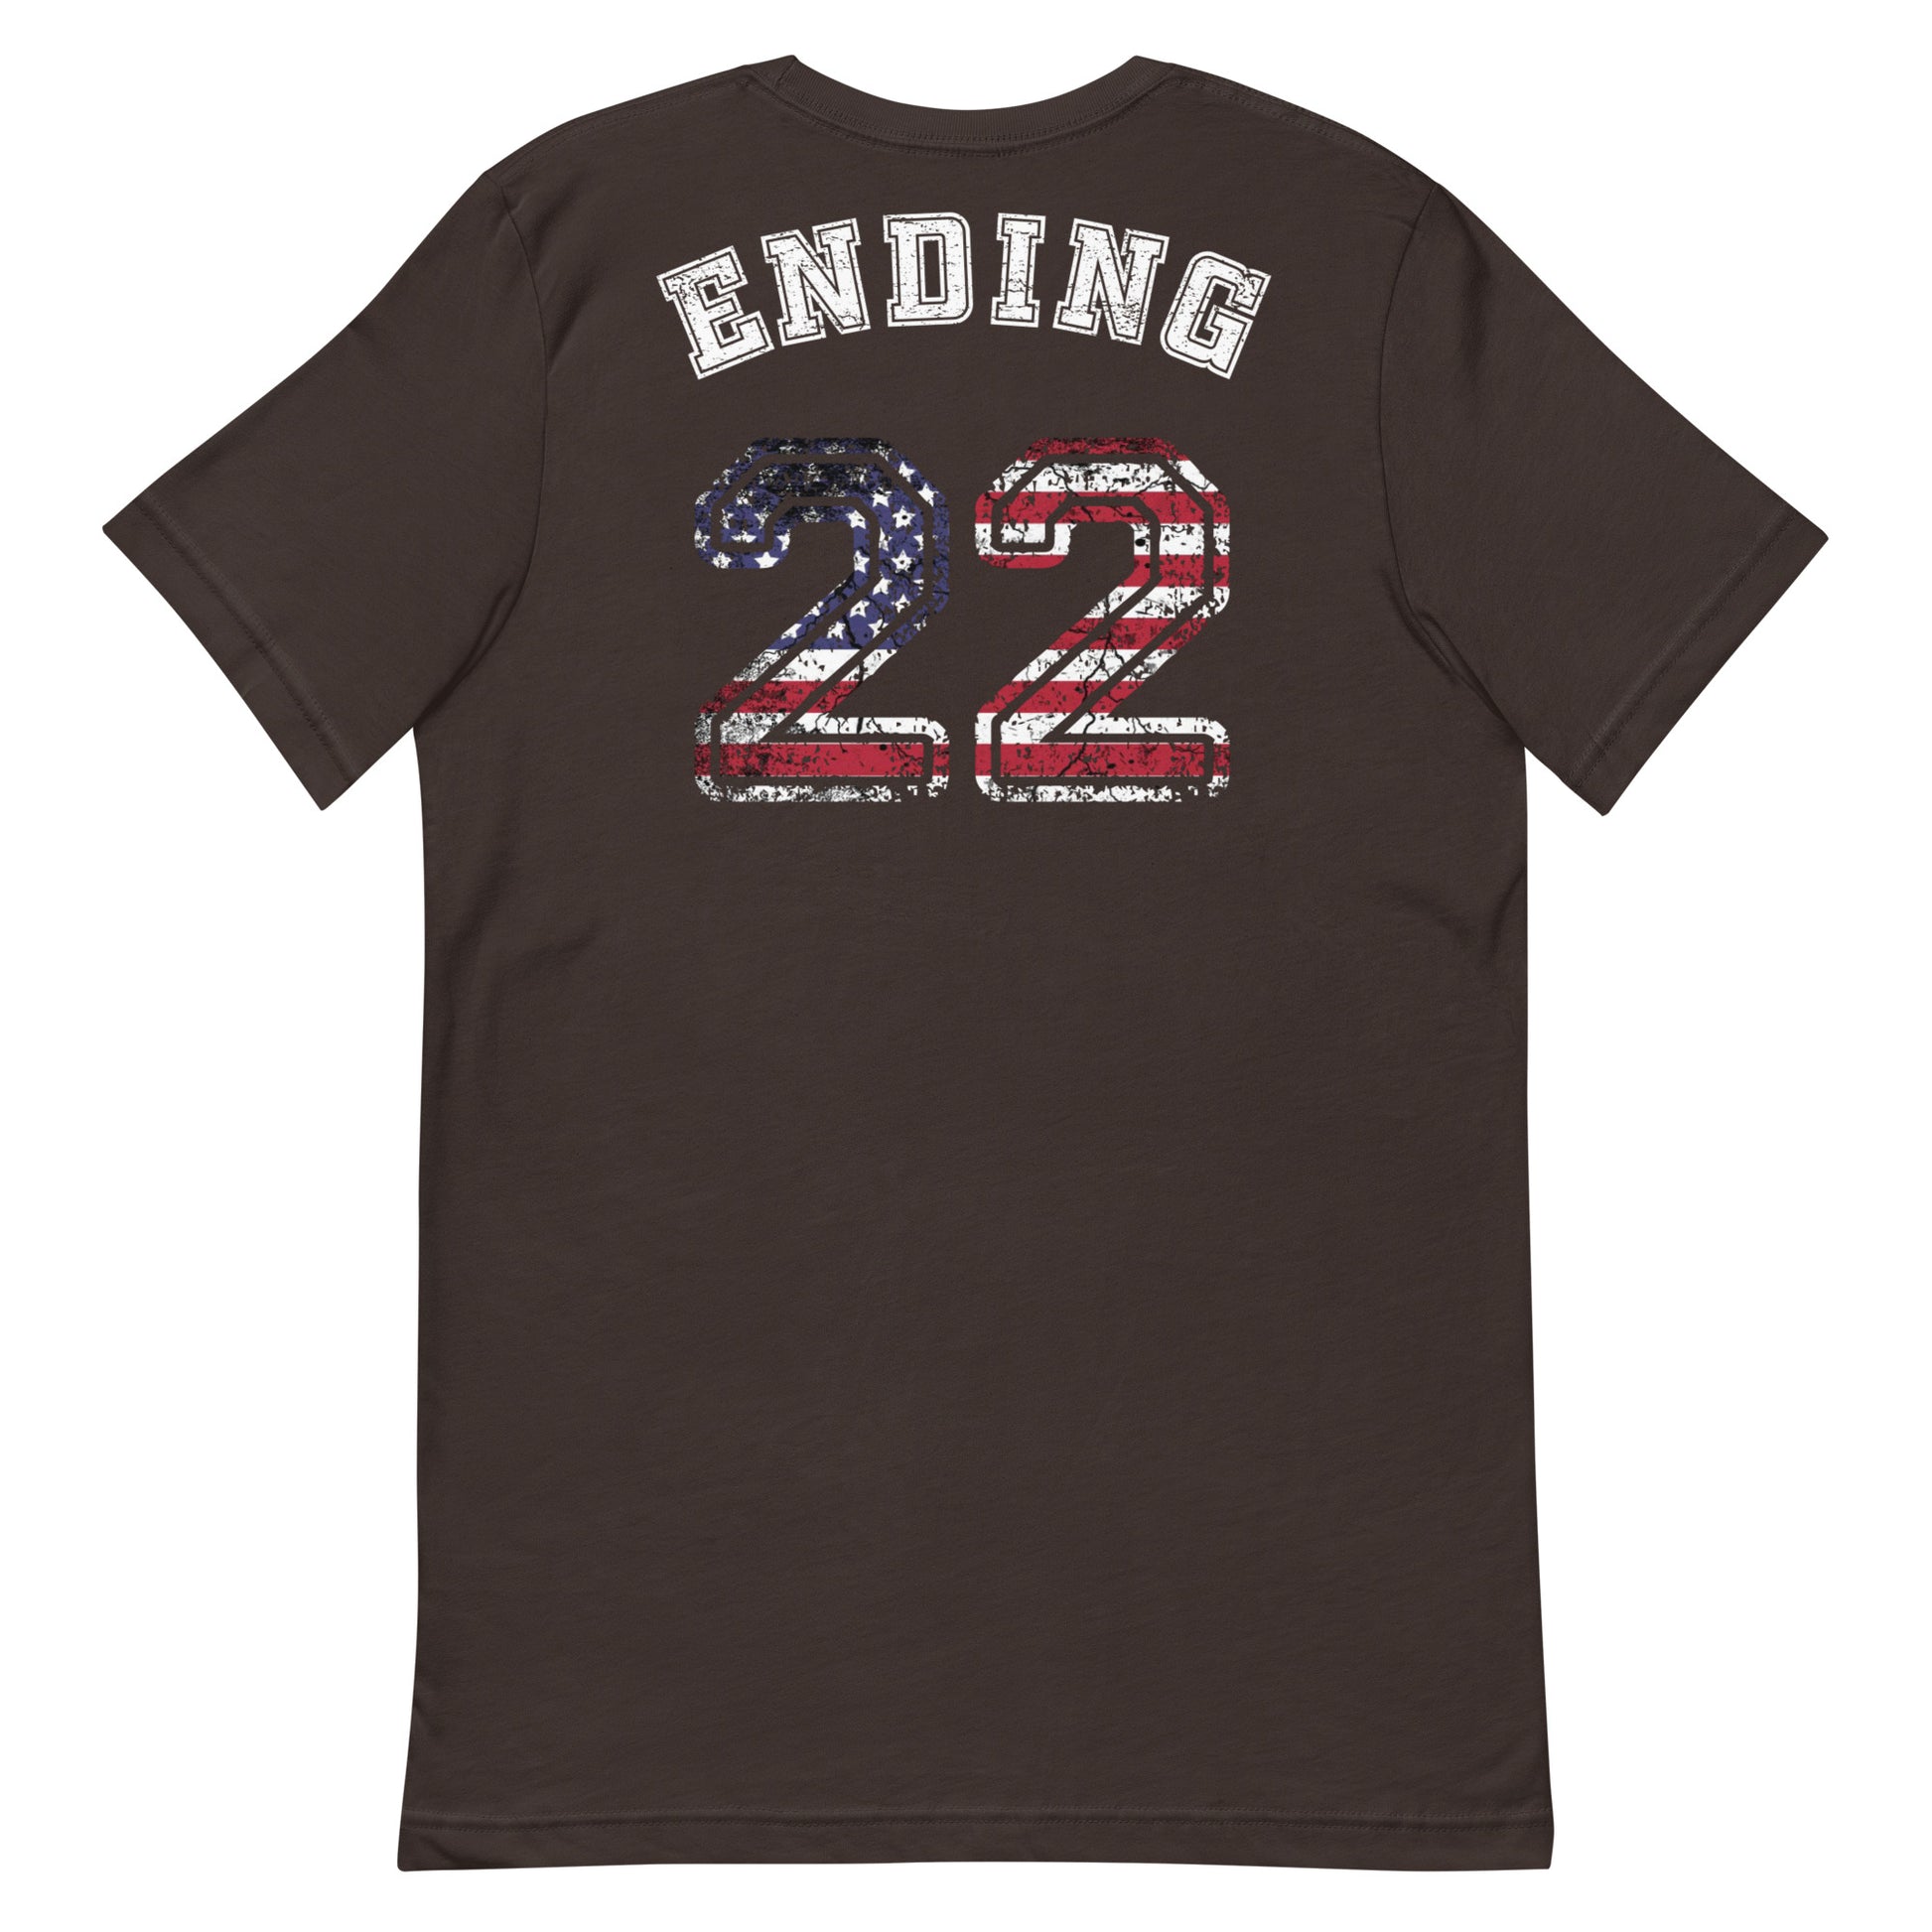 ENDING 22 Unsilencers T-Shirt Brown Back